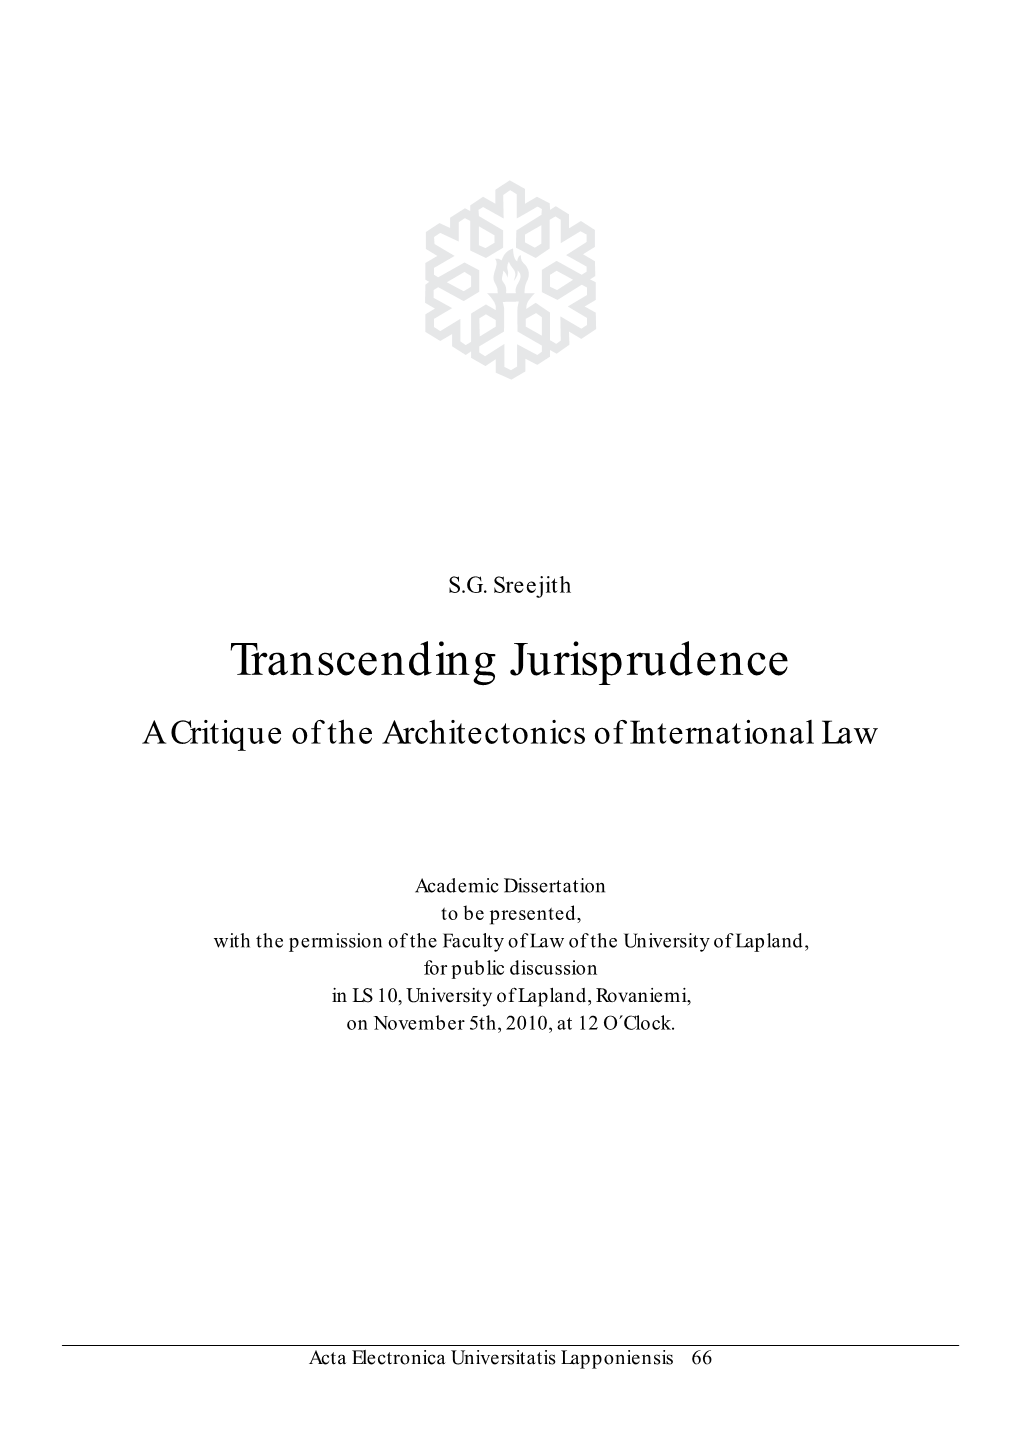 Transcending Jurisprudence a Critique of the Architectonics of International Law